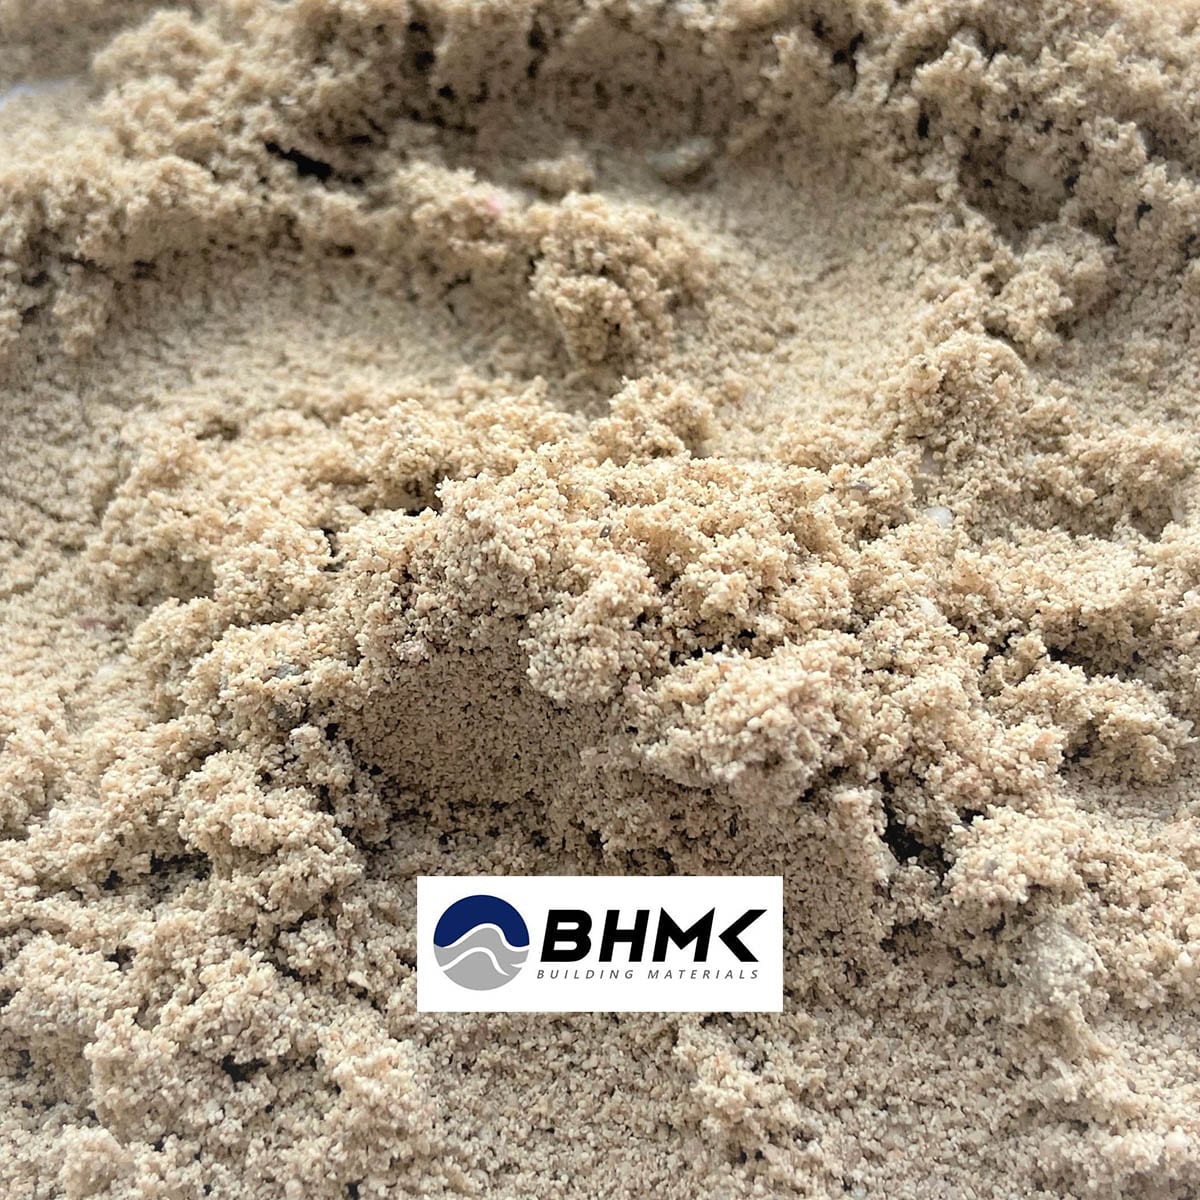 Washed sand bhmk play sand sea sand beach sand white sand best quality Dubai Sharjah Abu Dhabi UAE BHMK sand supplier